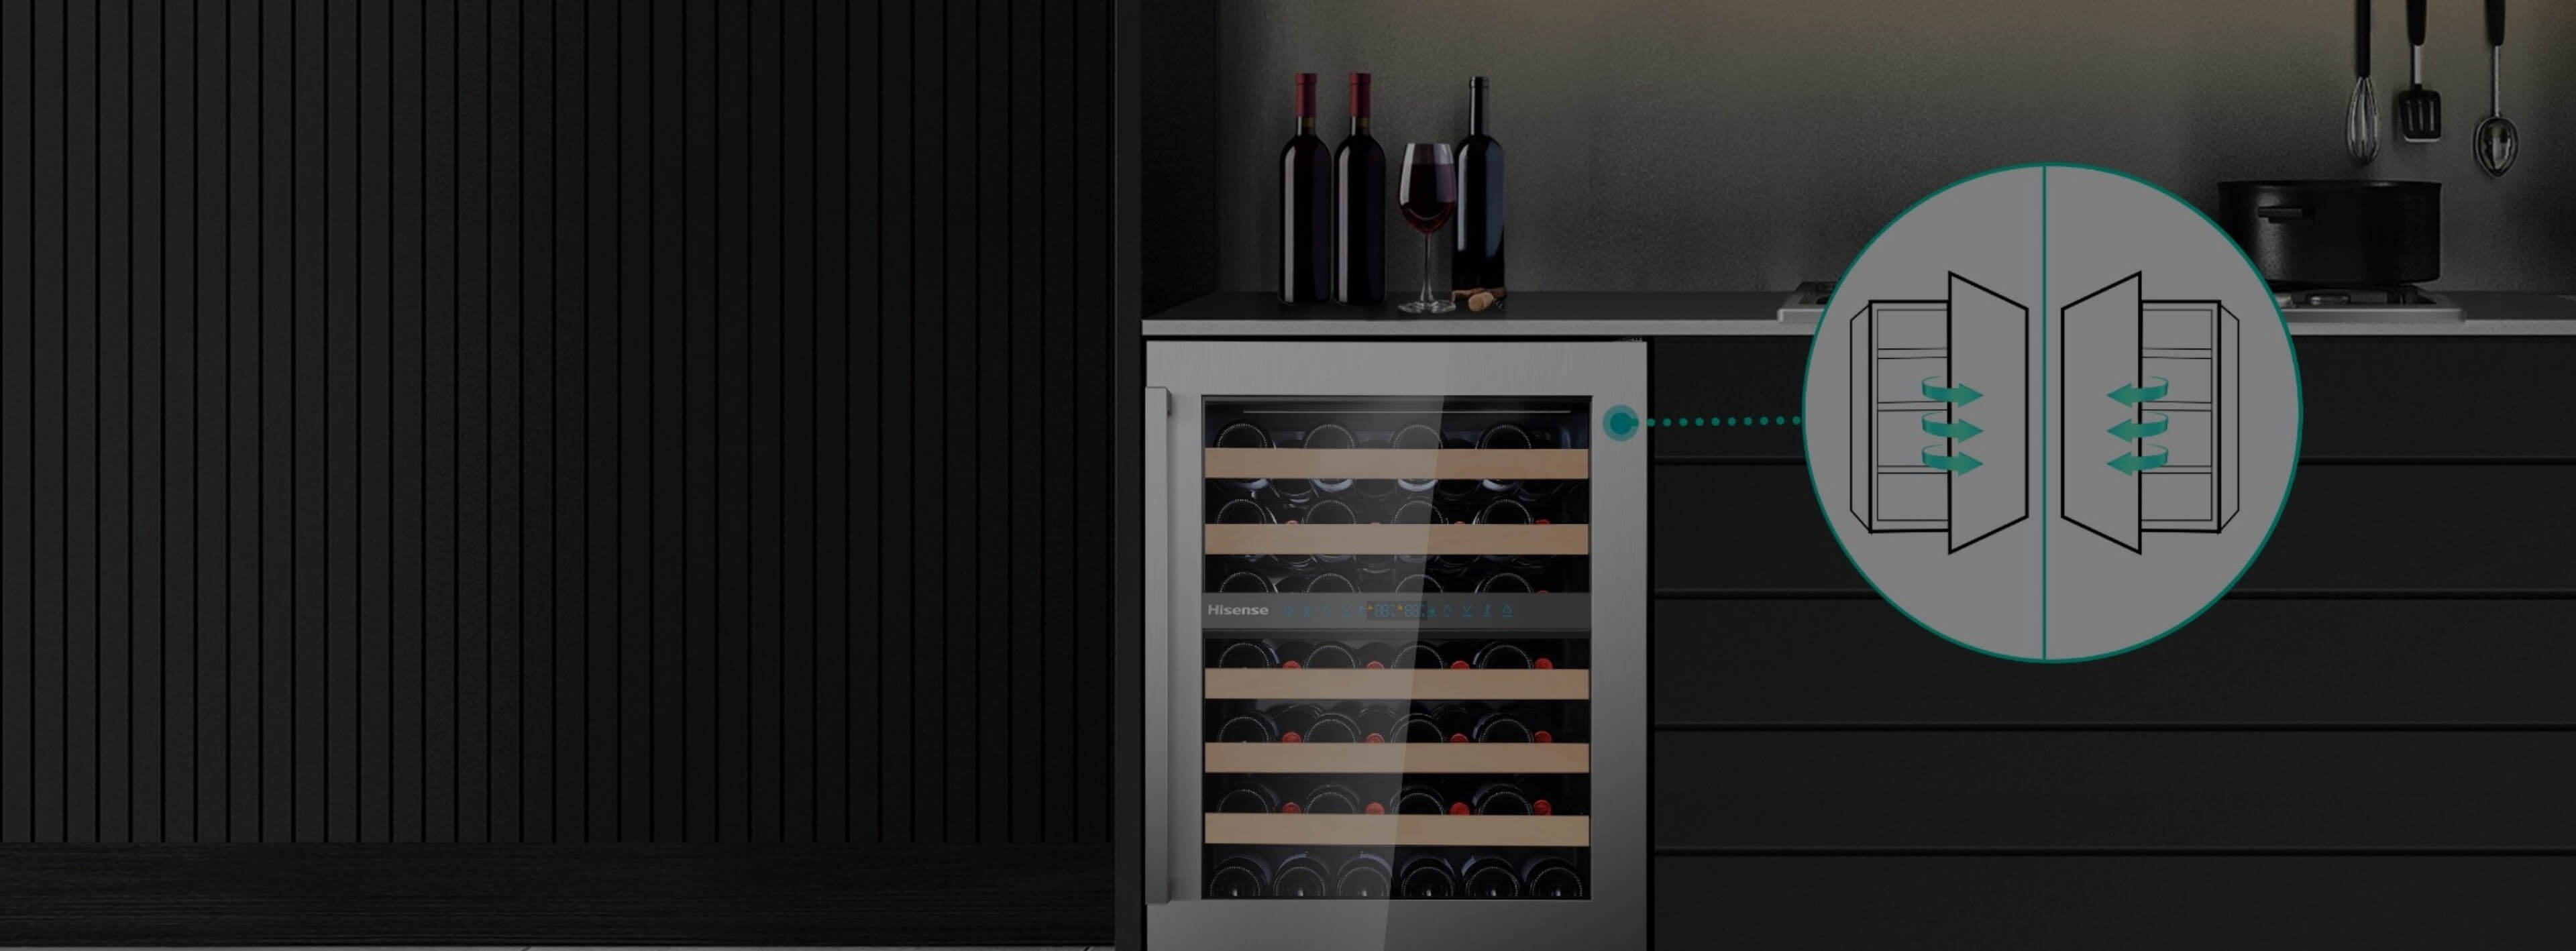 Hisense Wine Cabinet Flexible installation options